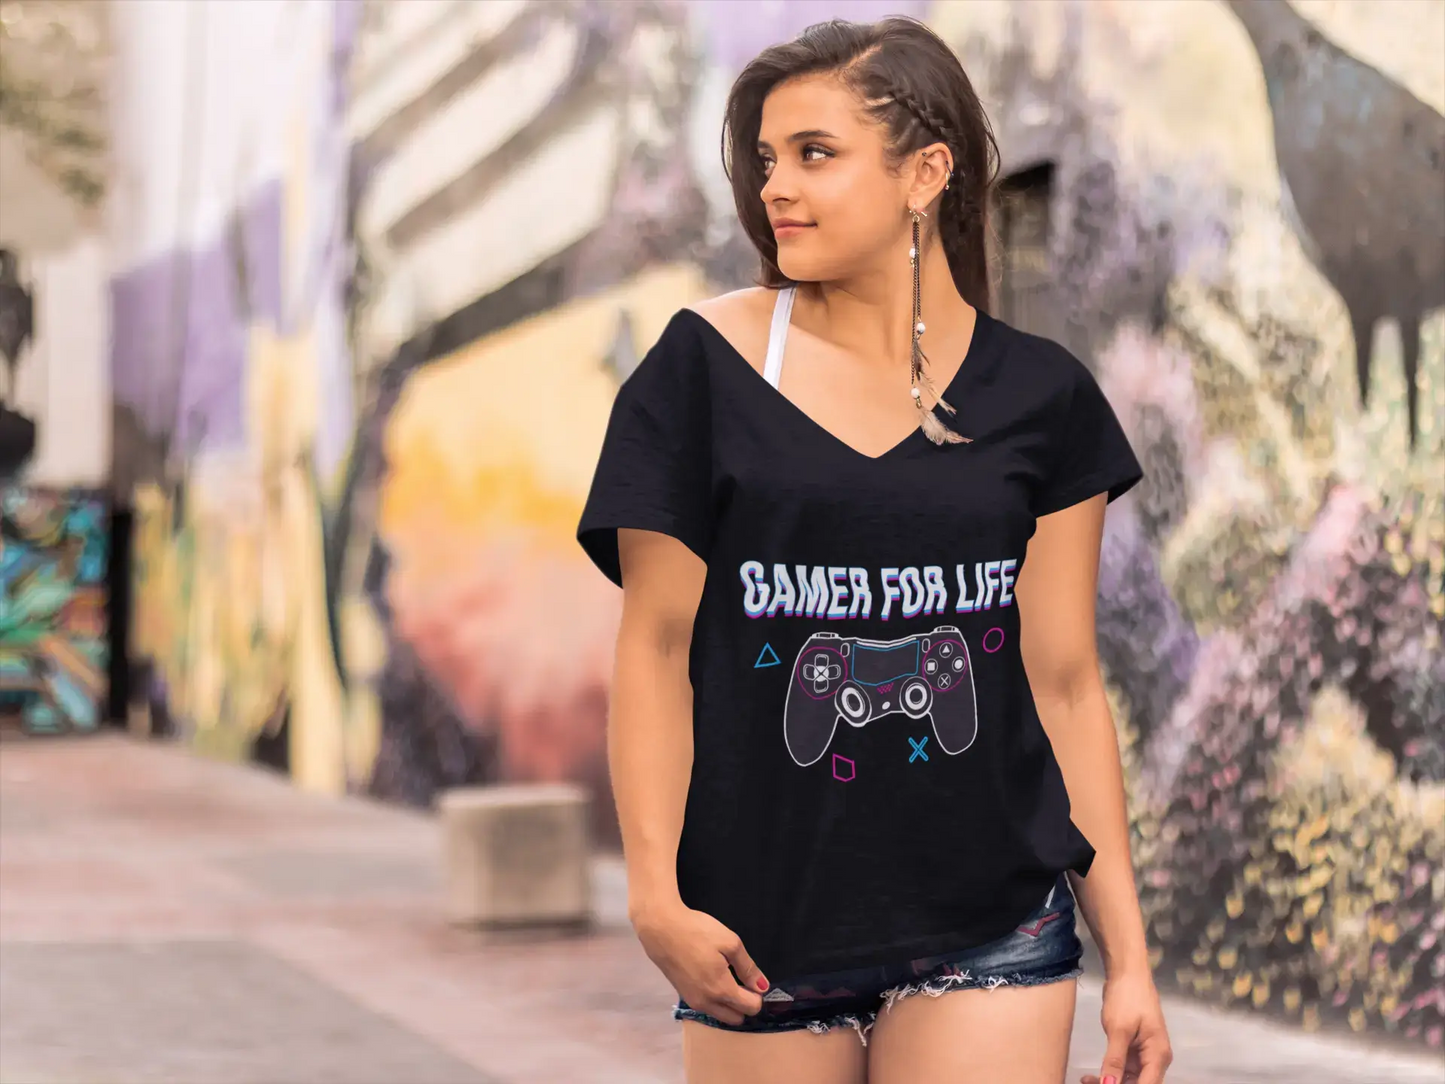 ULTRABASIC Women's Gaming T-Shirt Gamer for Life - Funny Game Tee Shirt